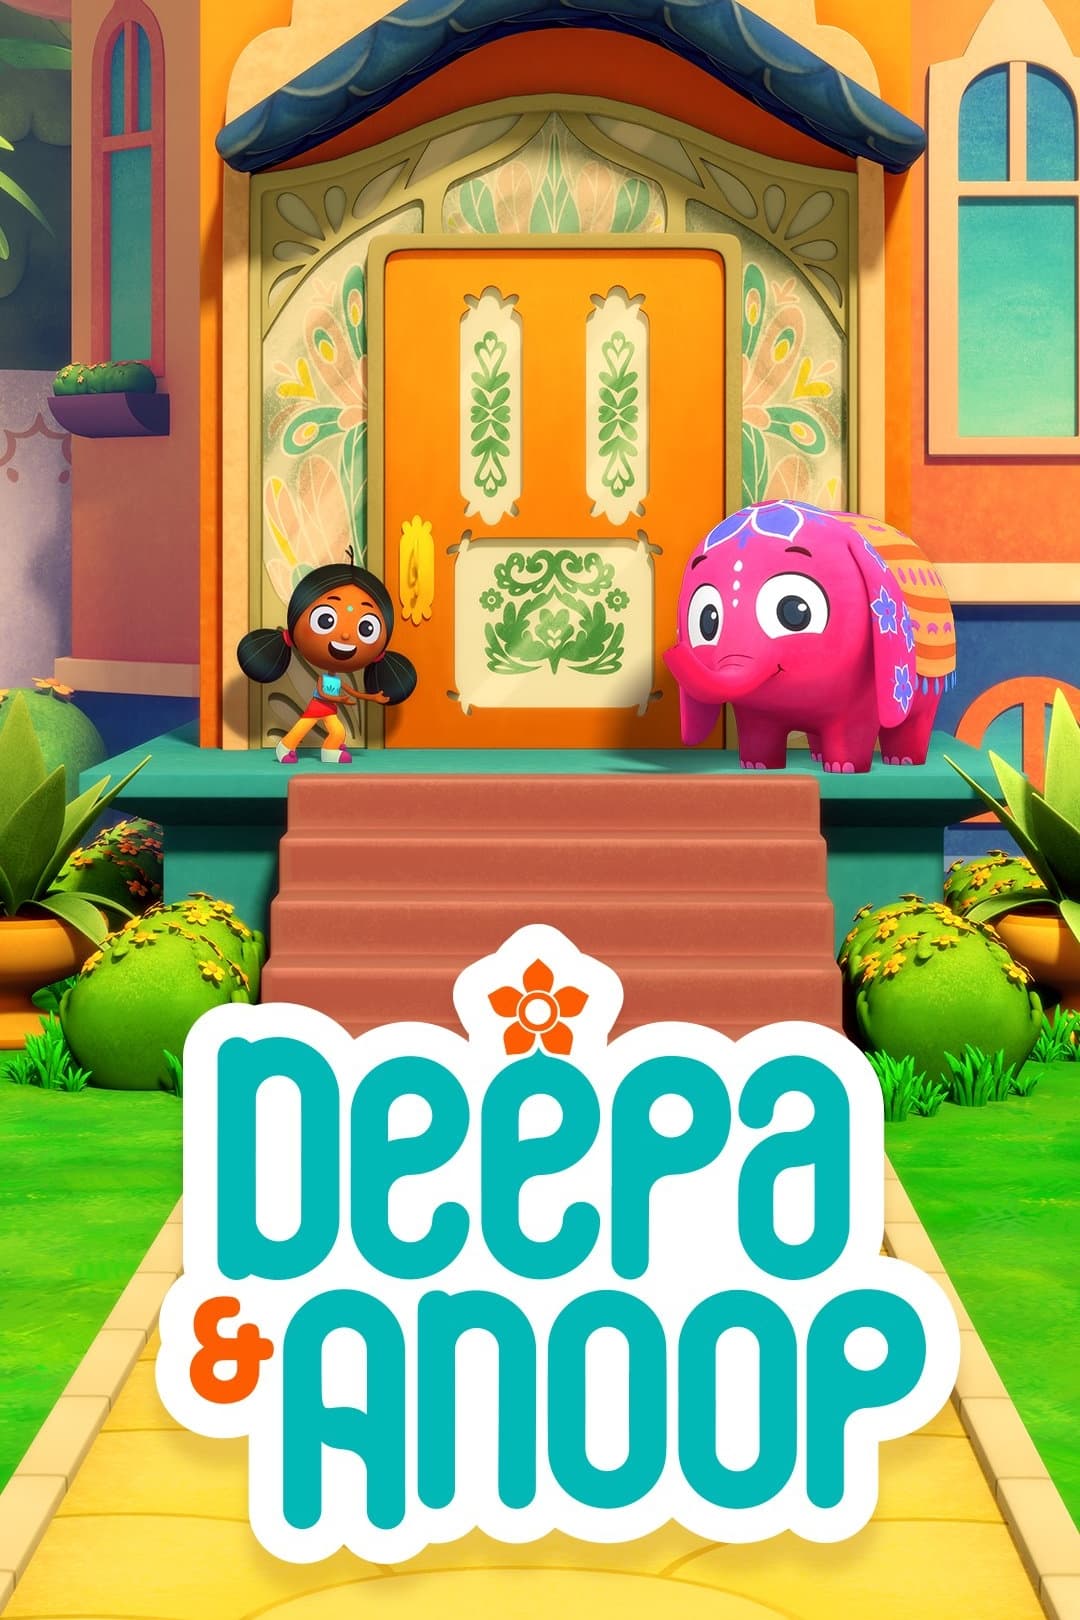 Deepa & Anoop TV Shows About Friendship